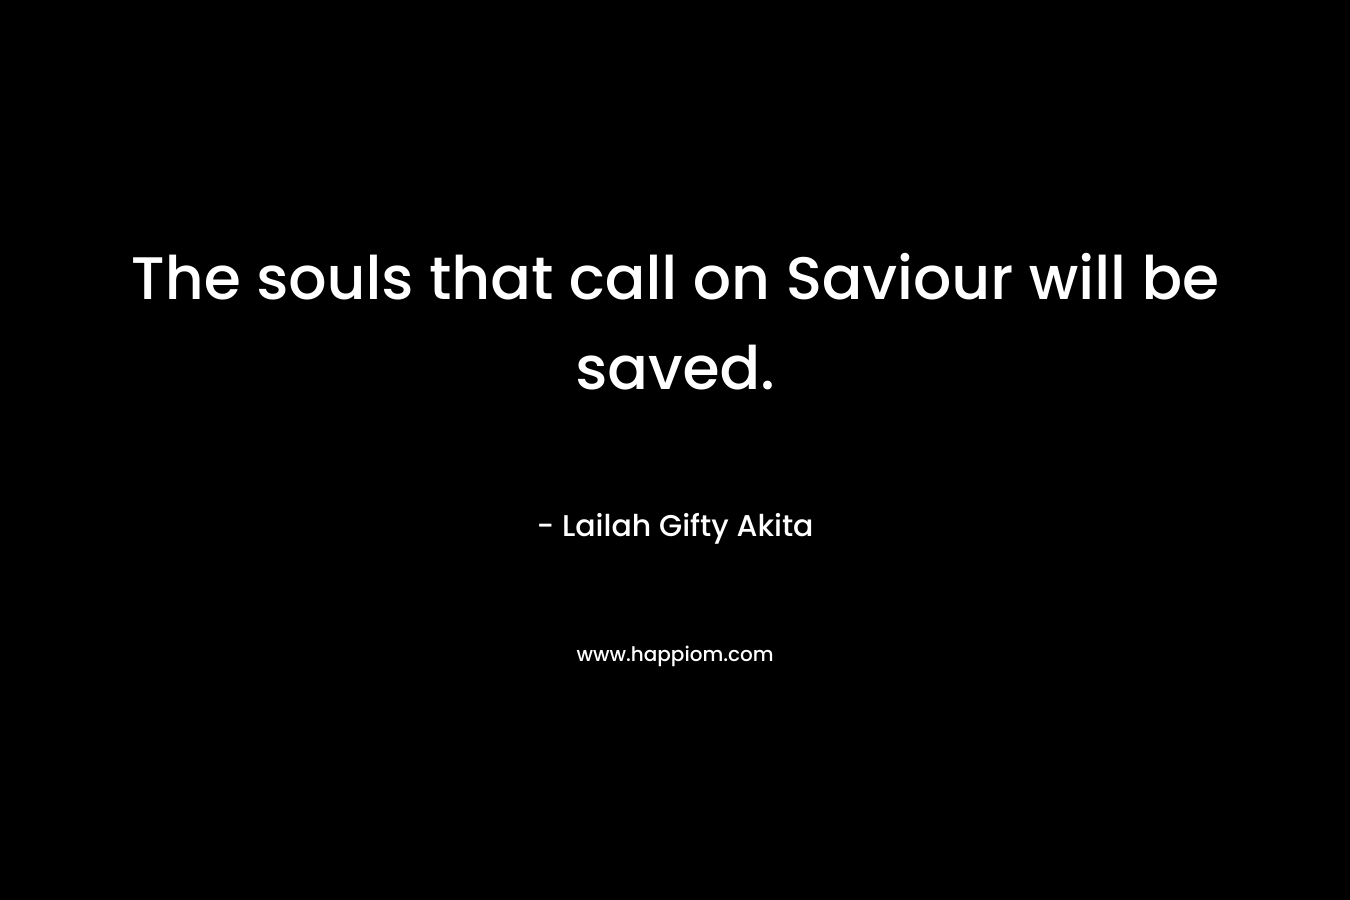 The souls that call on Saviour will be saved. – Lailah Gifty Akita